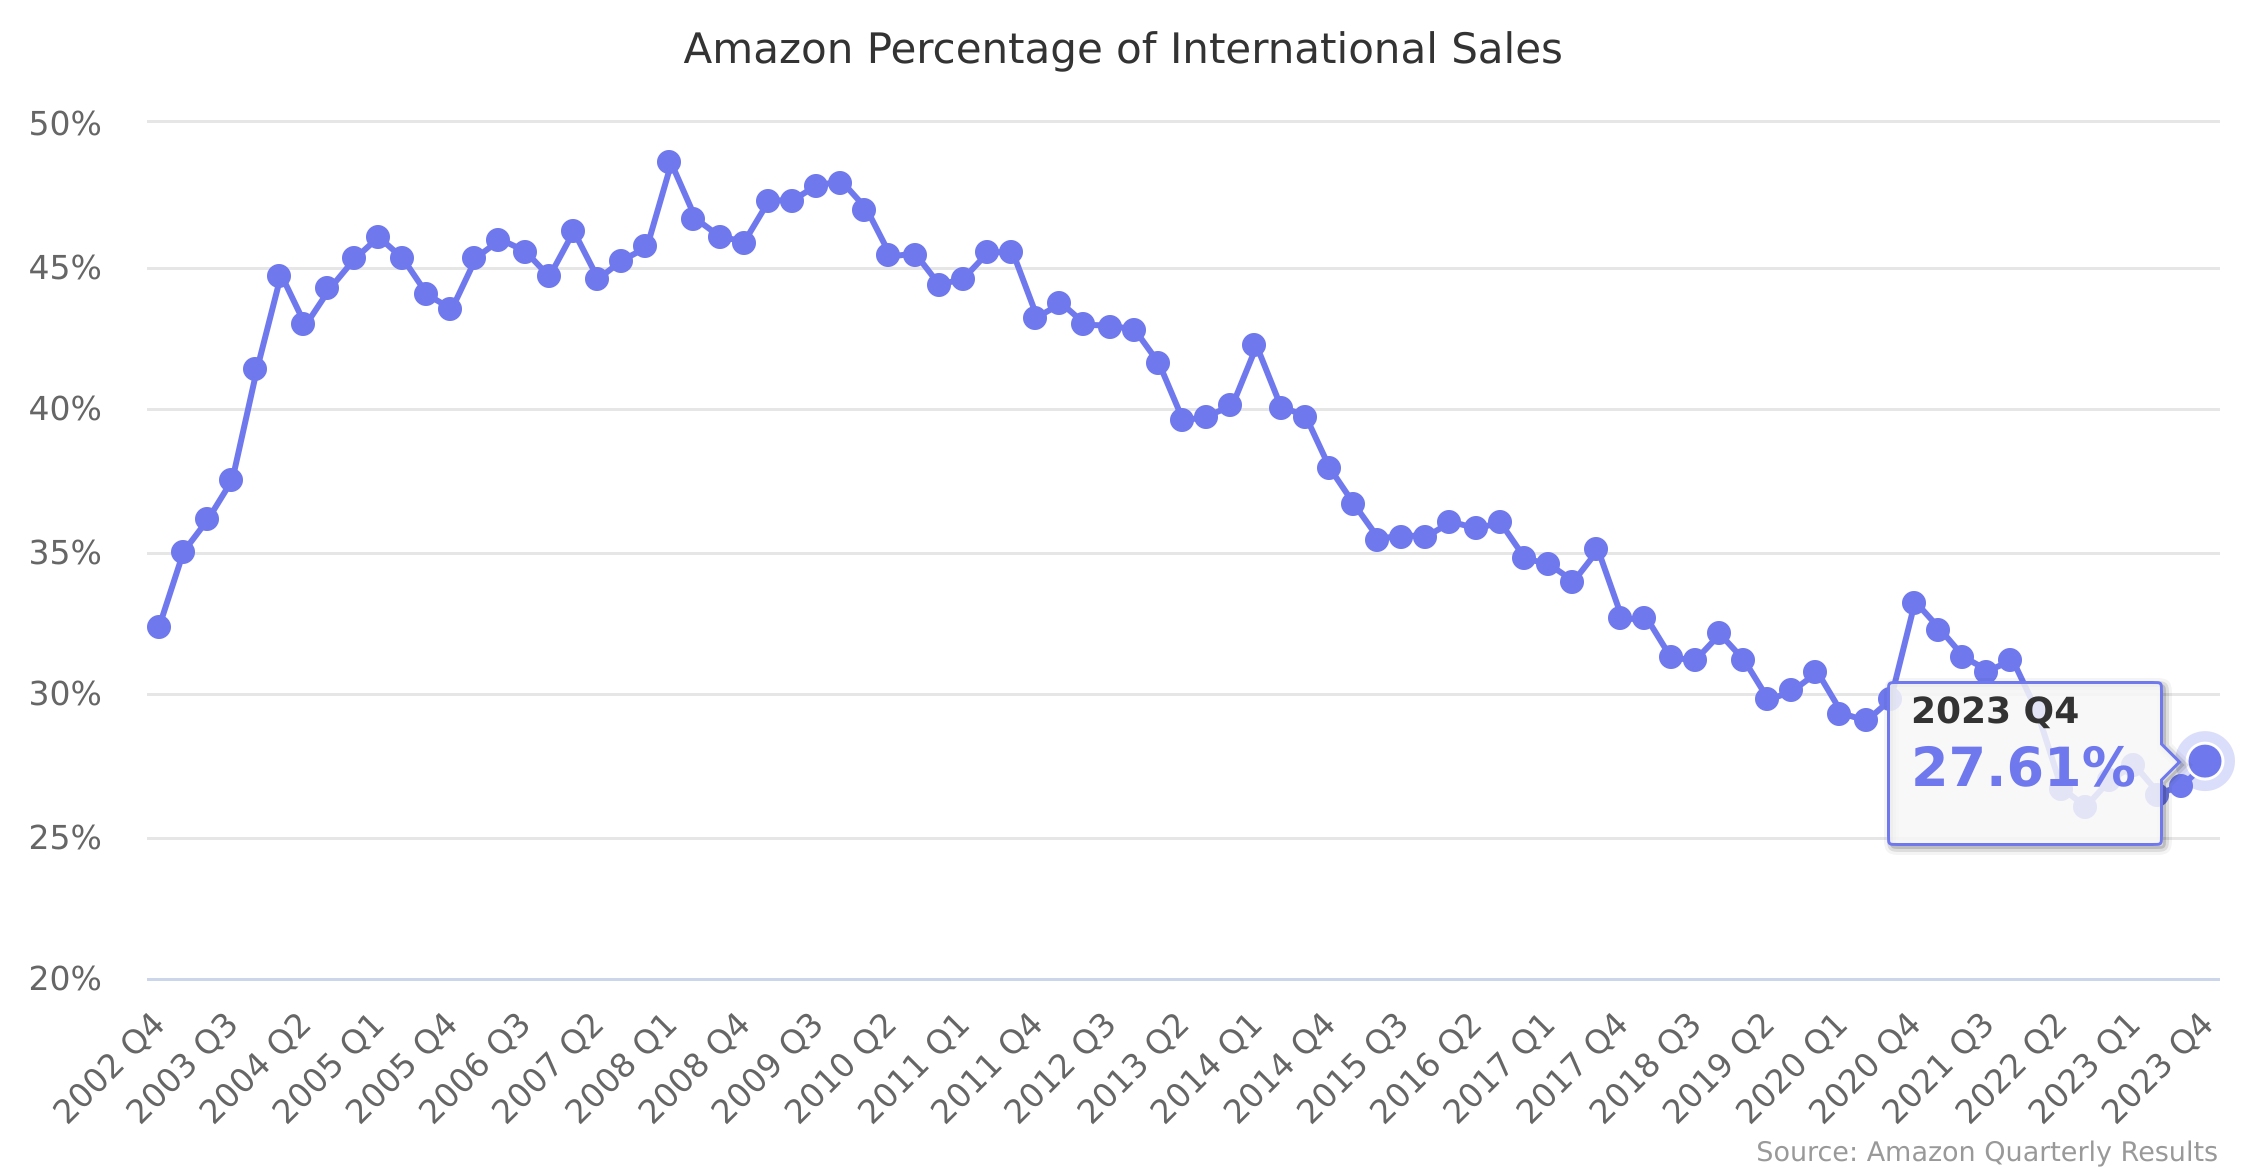 Amazon Percentage of International Sales